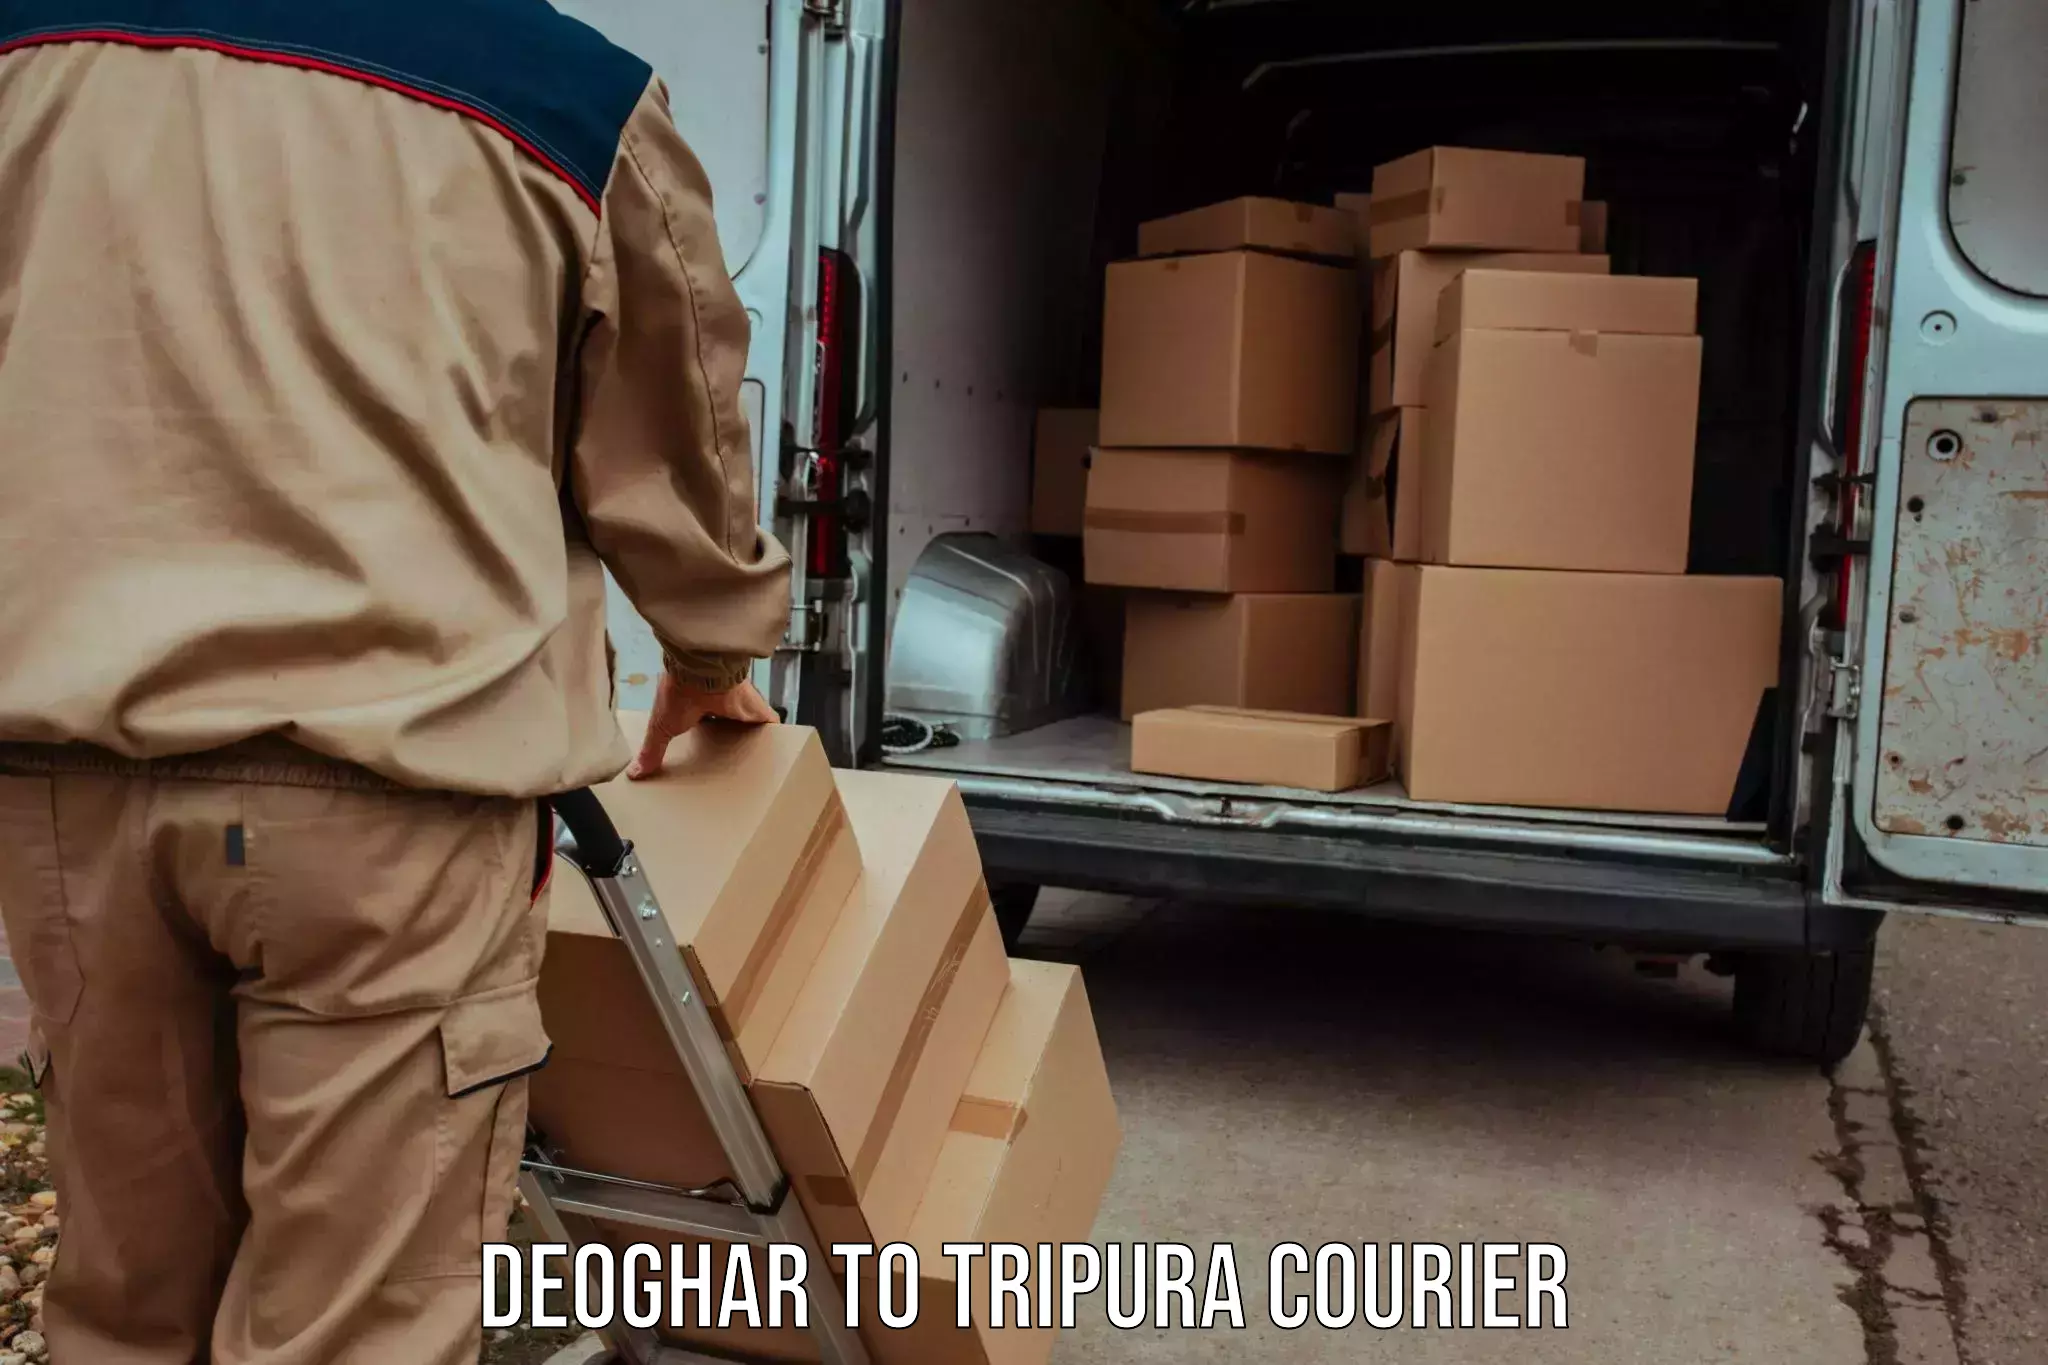 24-hour courier service Deoghar to Udaipur Tripura